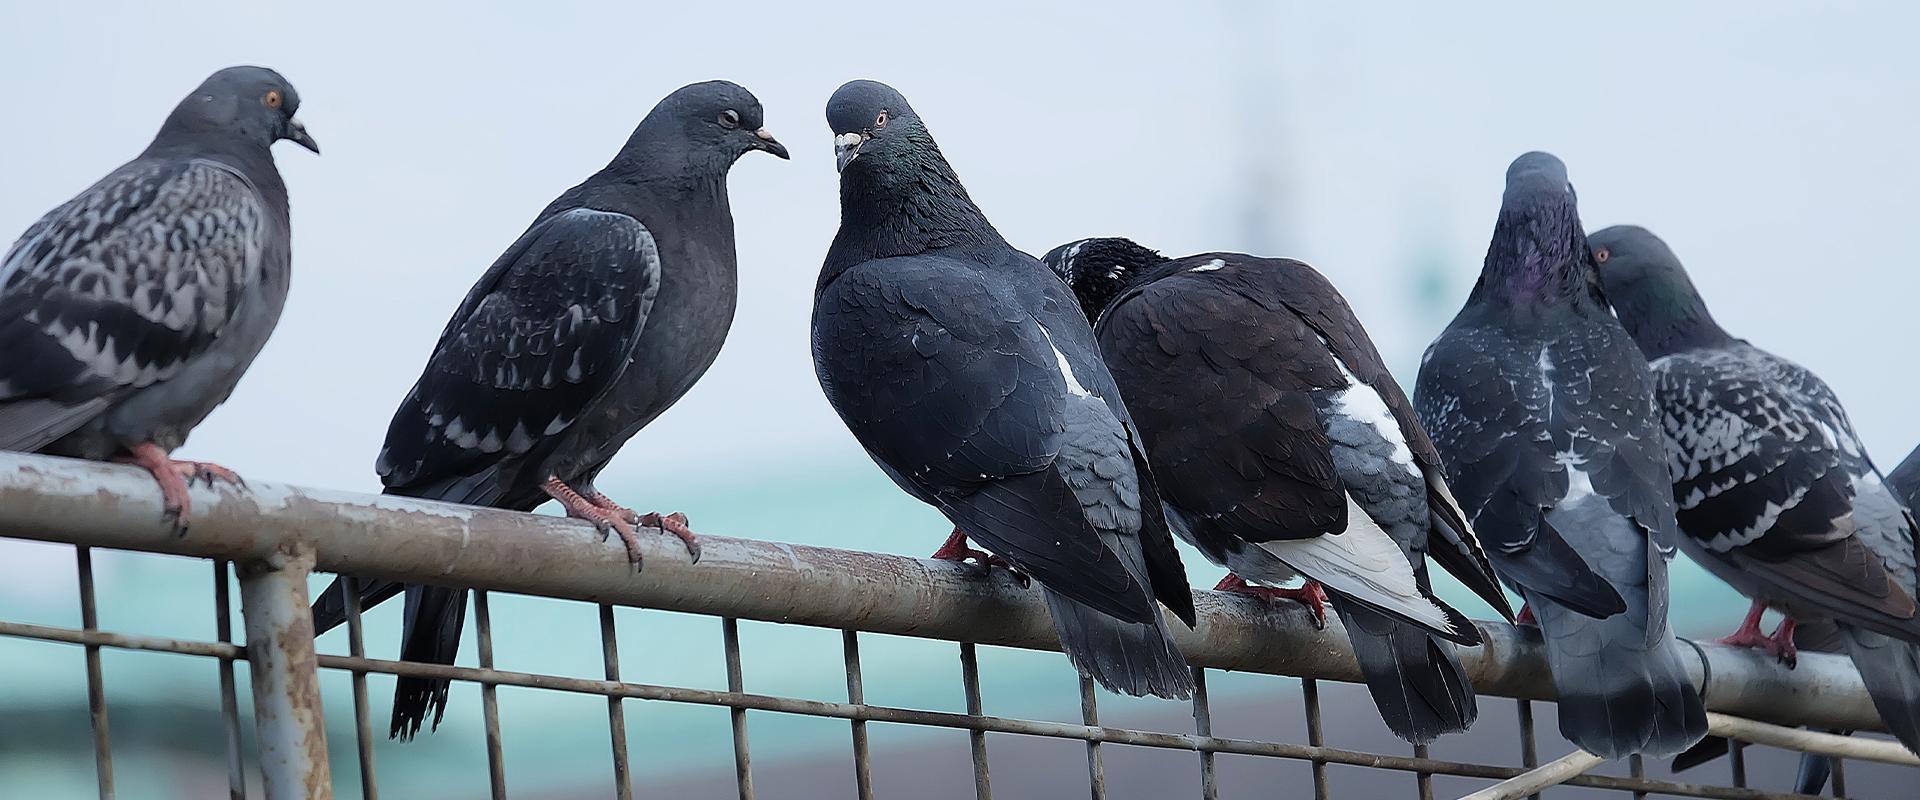 pigeons perched on rail